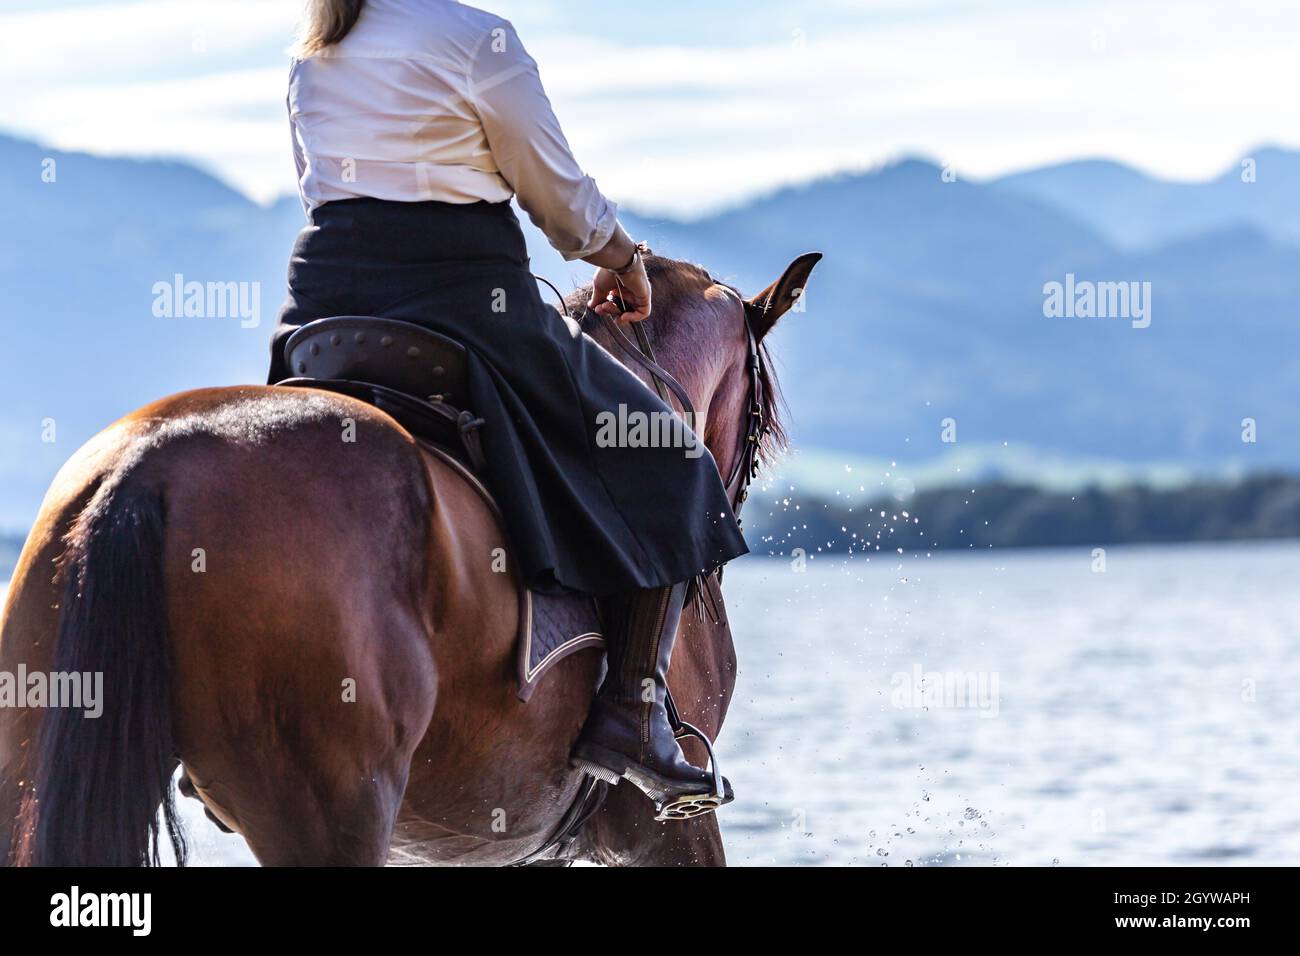 Classic riding art: A rider in a riding skirt on a bay pura raza espanola horse Stock Photo